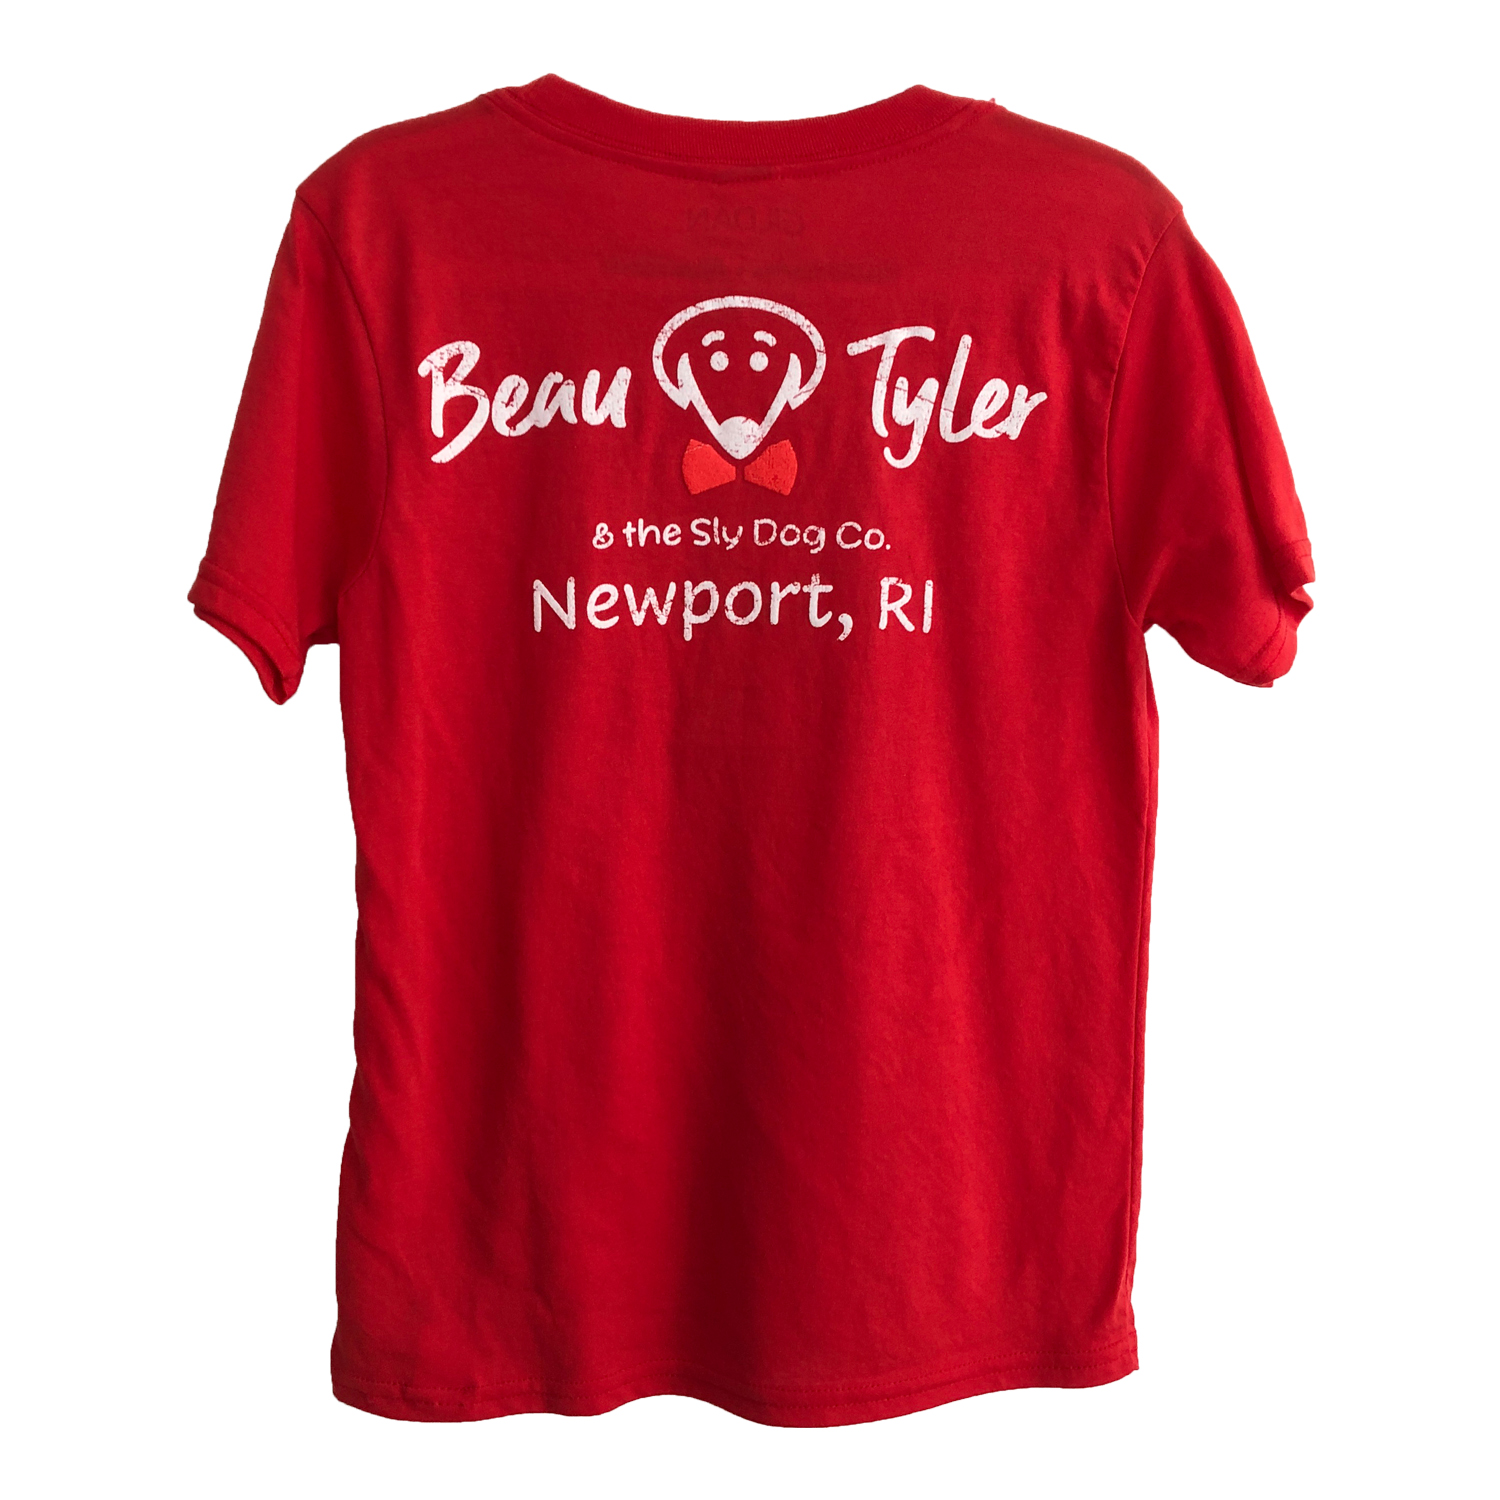 Beau Tyler - Kids vintage Kelly shirt red Newport back temp